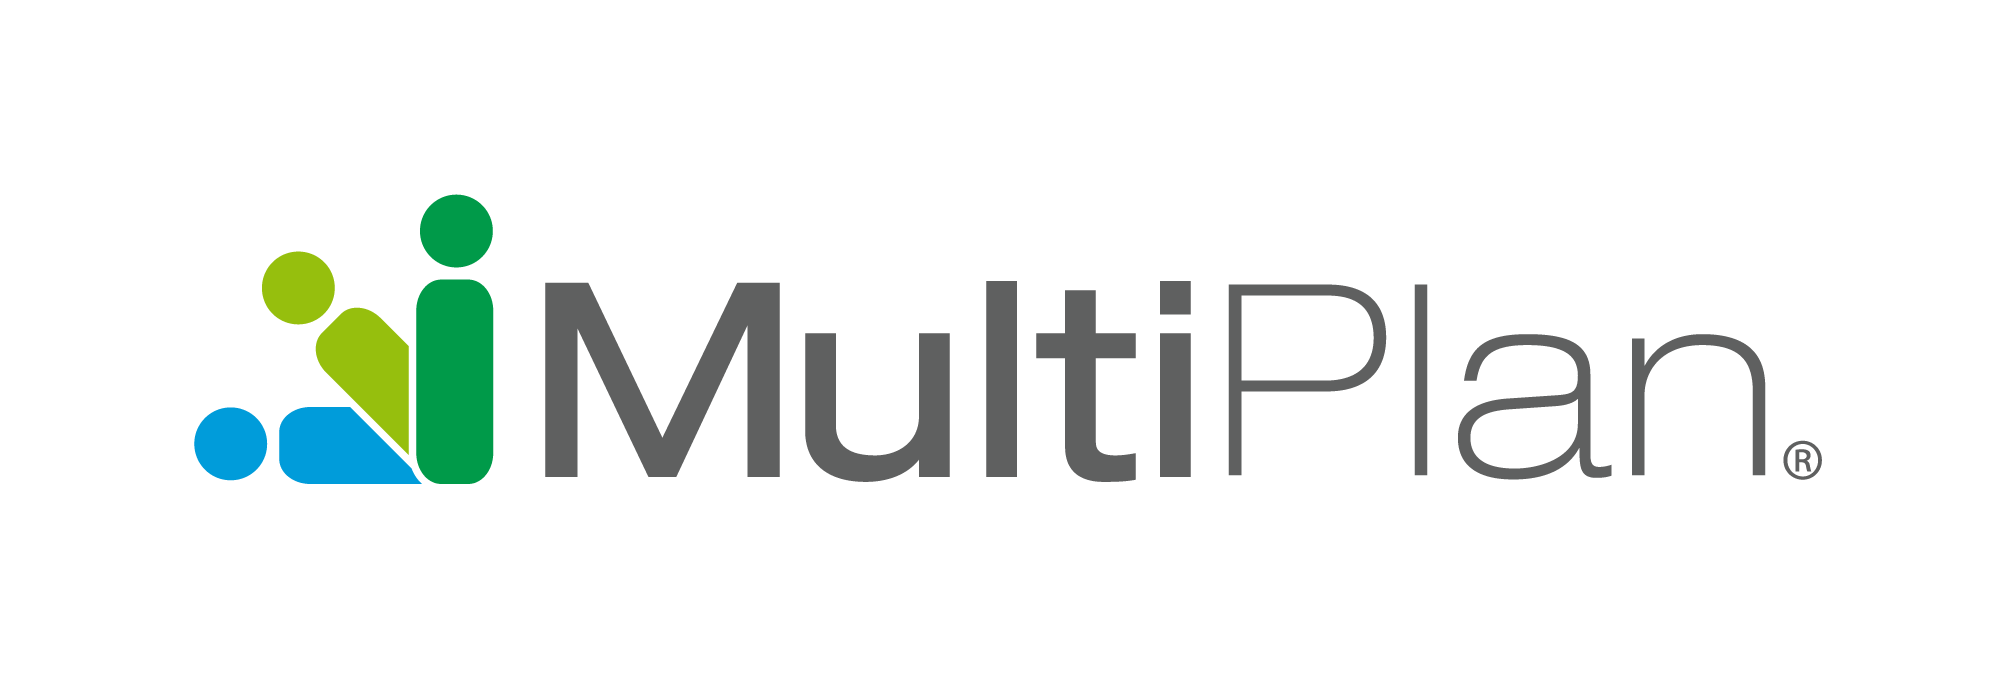 MultiPlan corporate logo